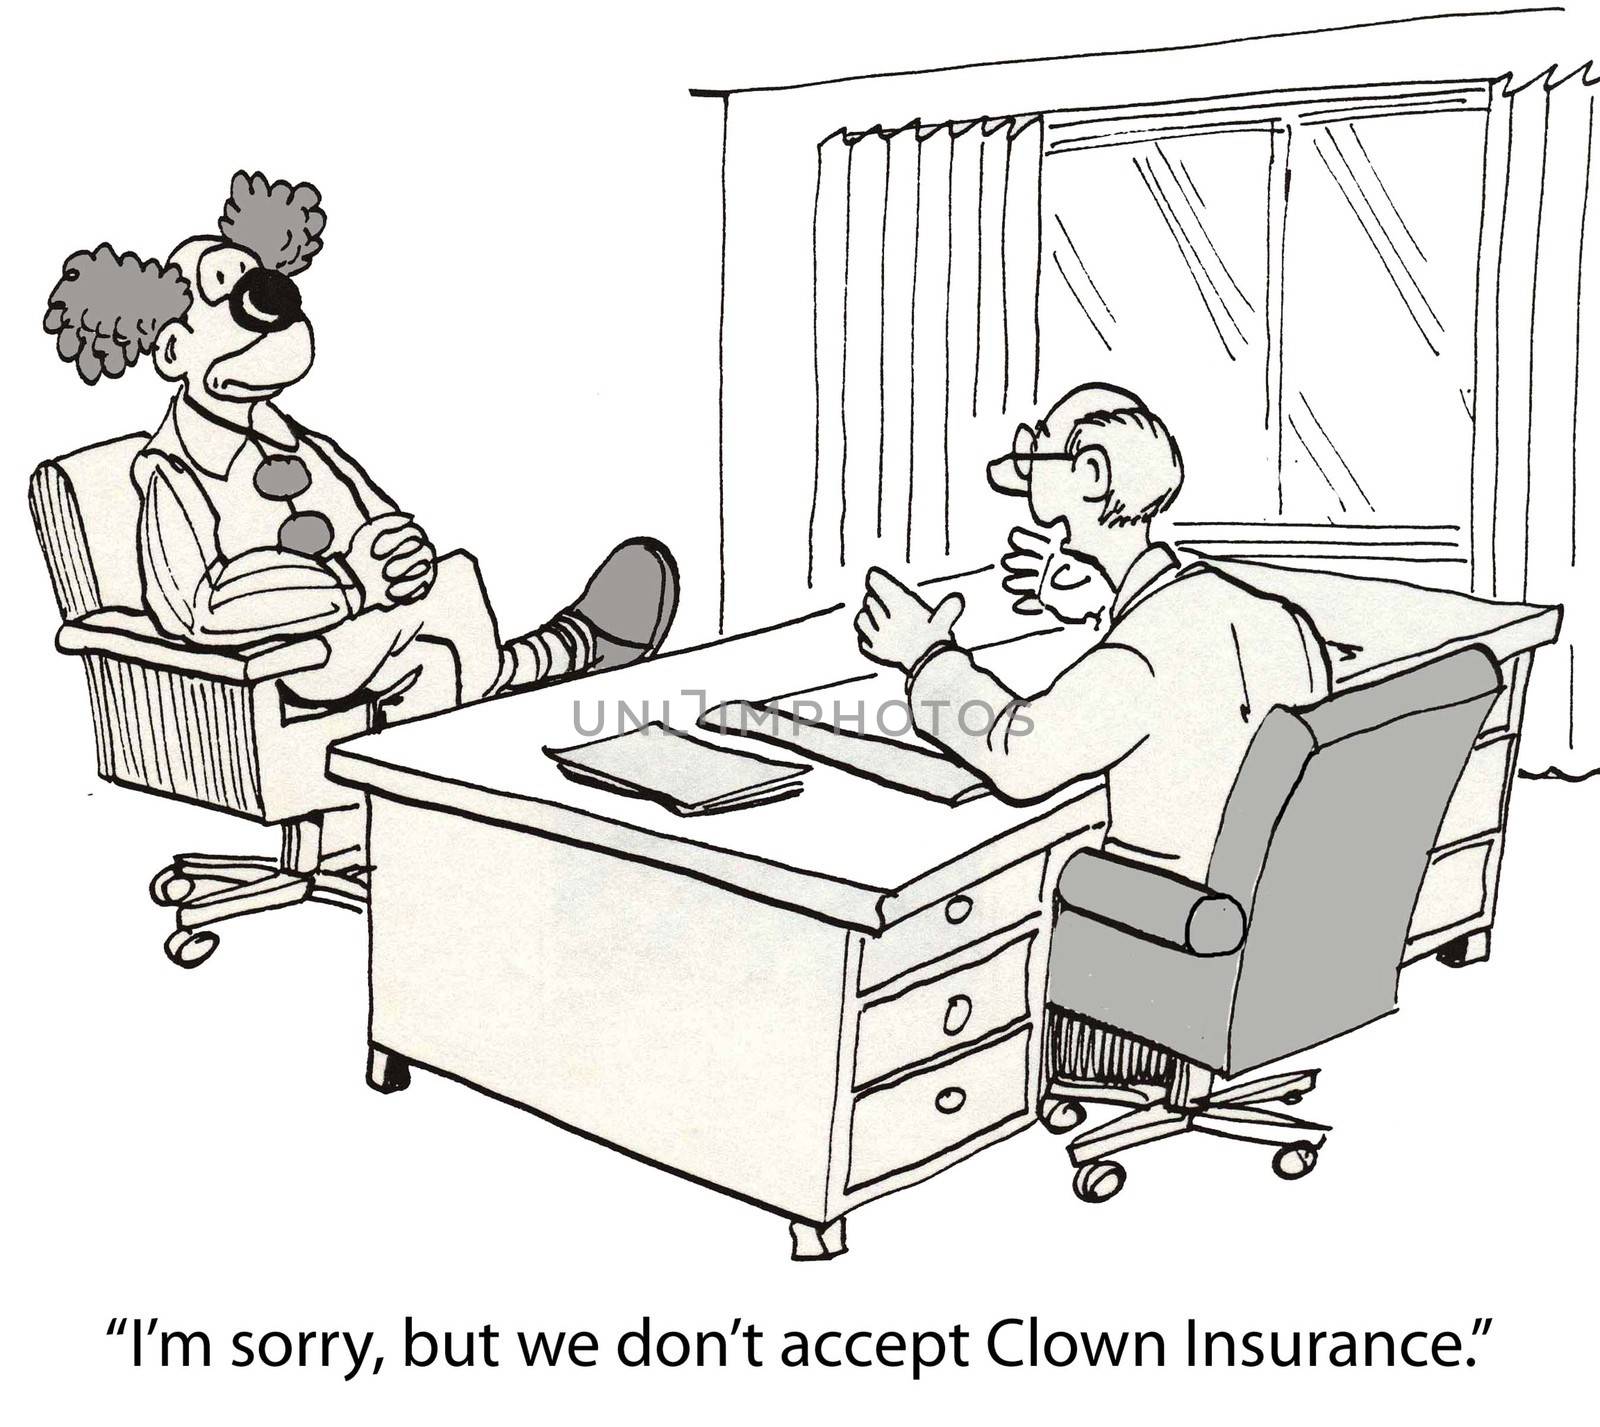 Clown Insurance by andrewgenn